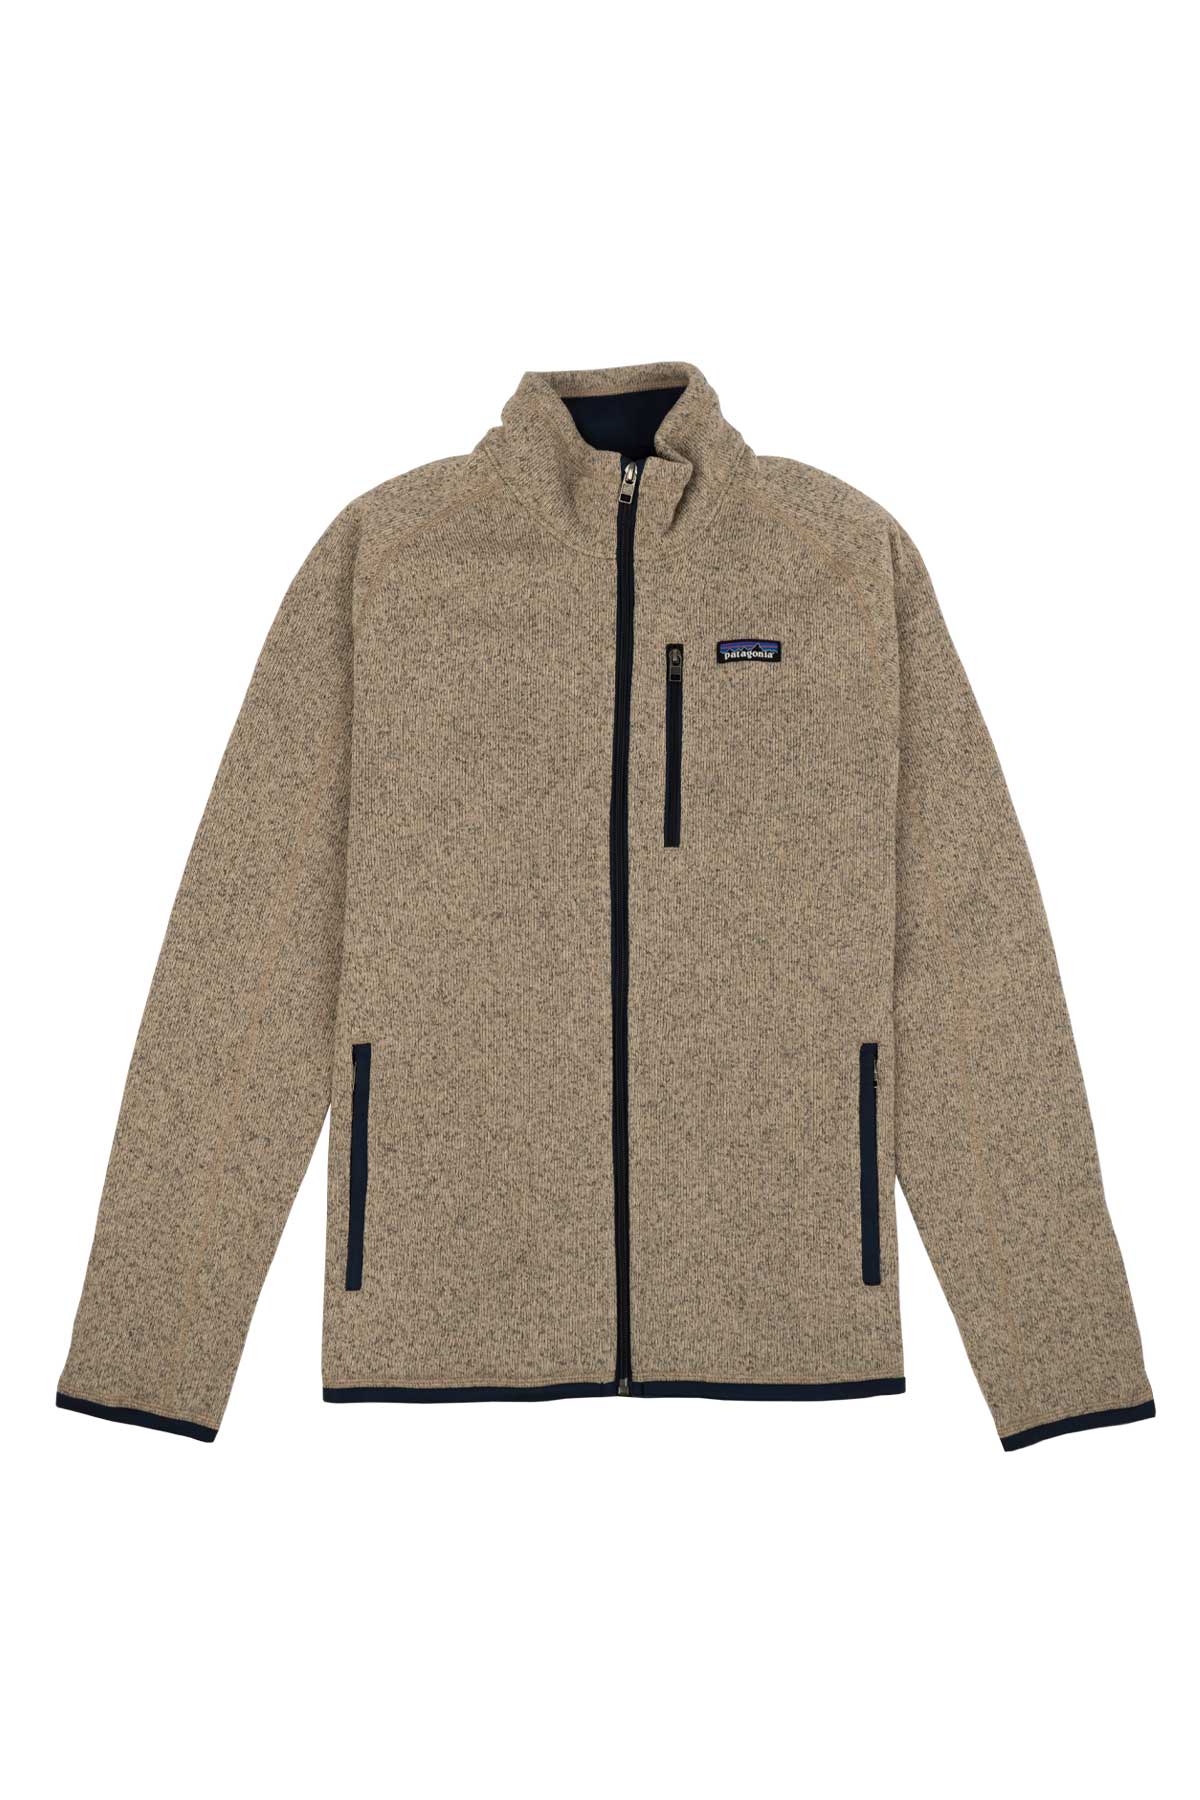 Veste - Better Sweater Jacket - Patagonia